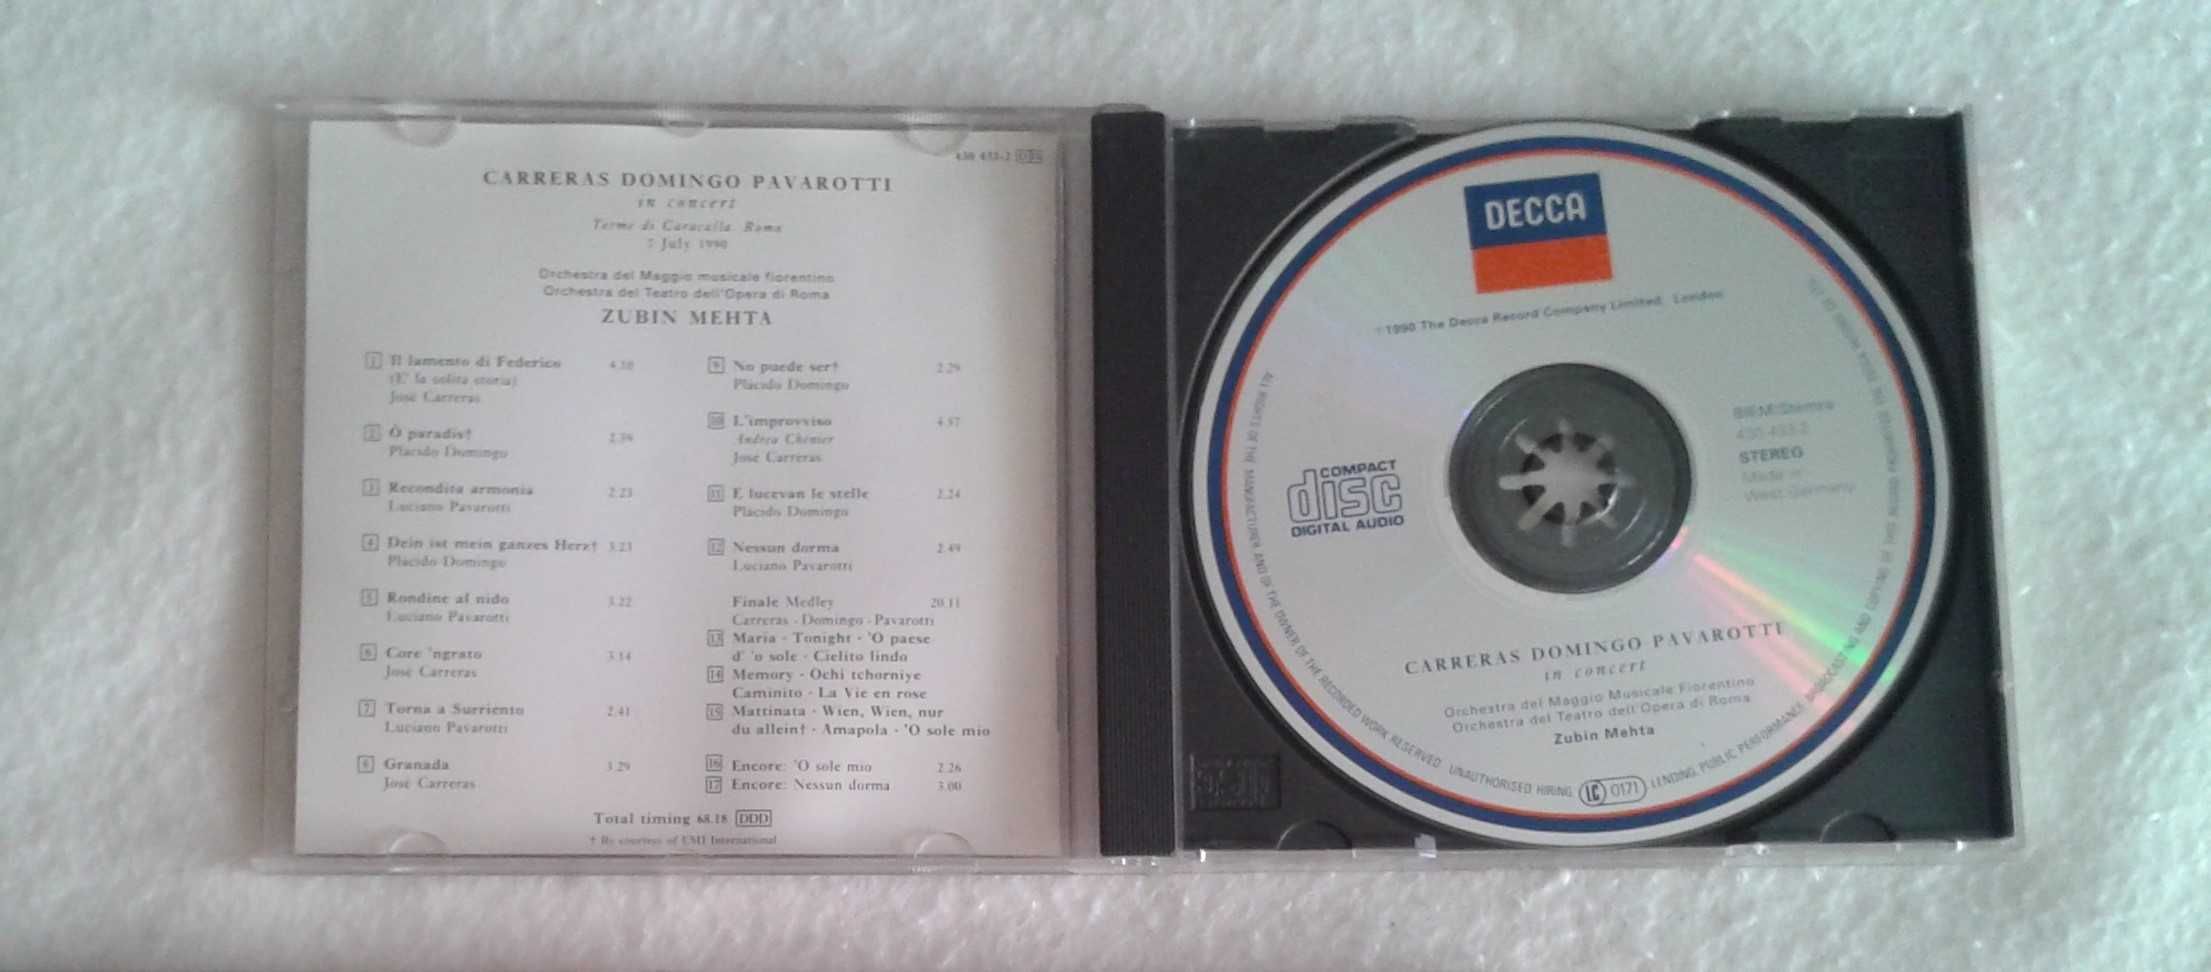 DISCOS CD música intérpretes estrangeiros diversos -pop,rock,etc